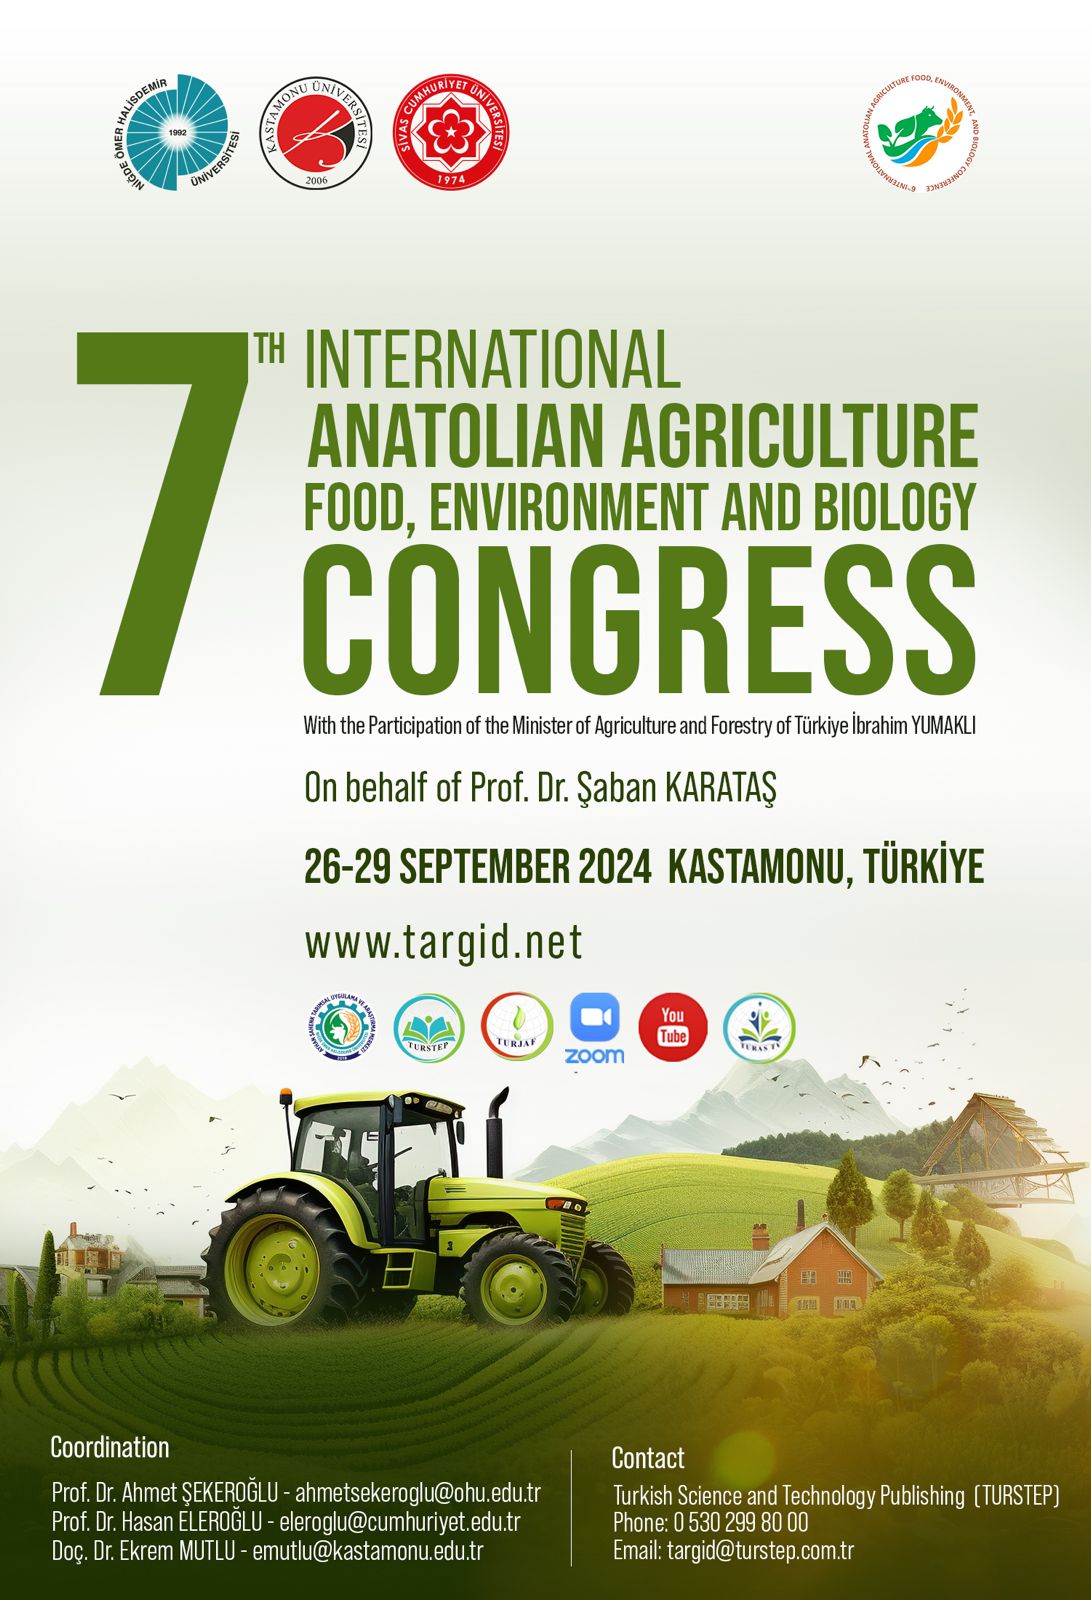 					View 2024: 7th International Anatolian Agriculture, Food, Environment and Biology Congress, Kastamonu/Türkiye
				